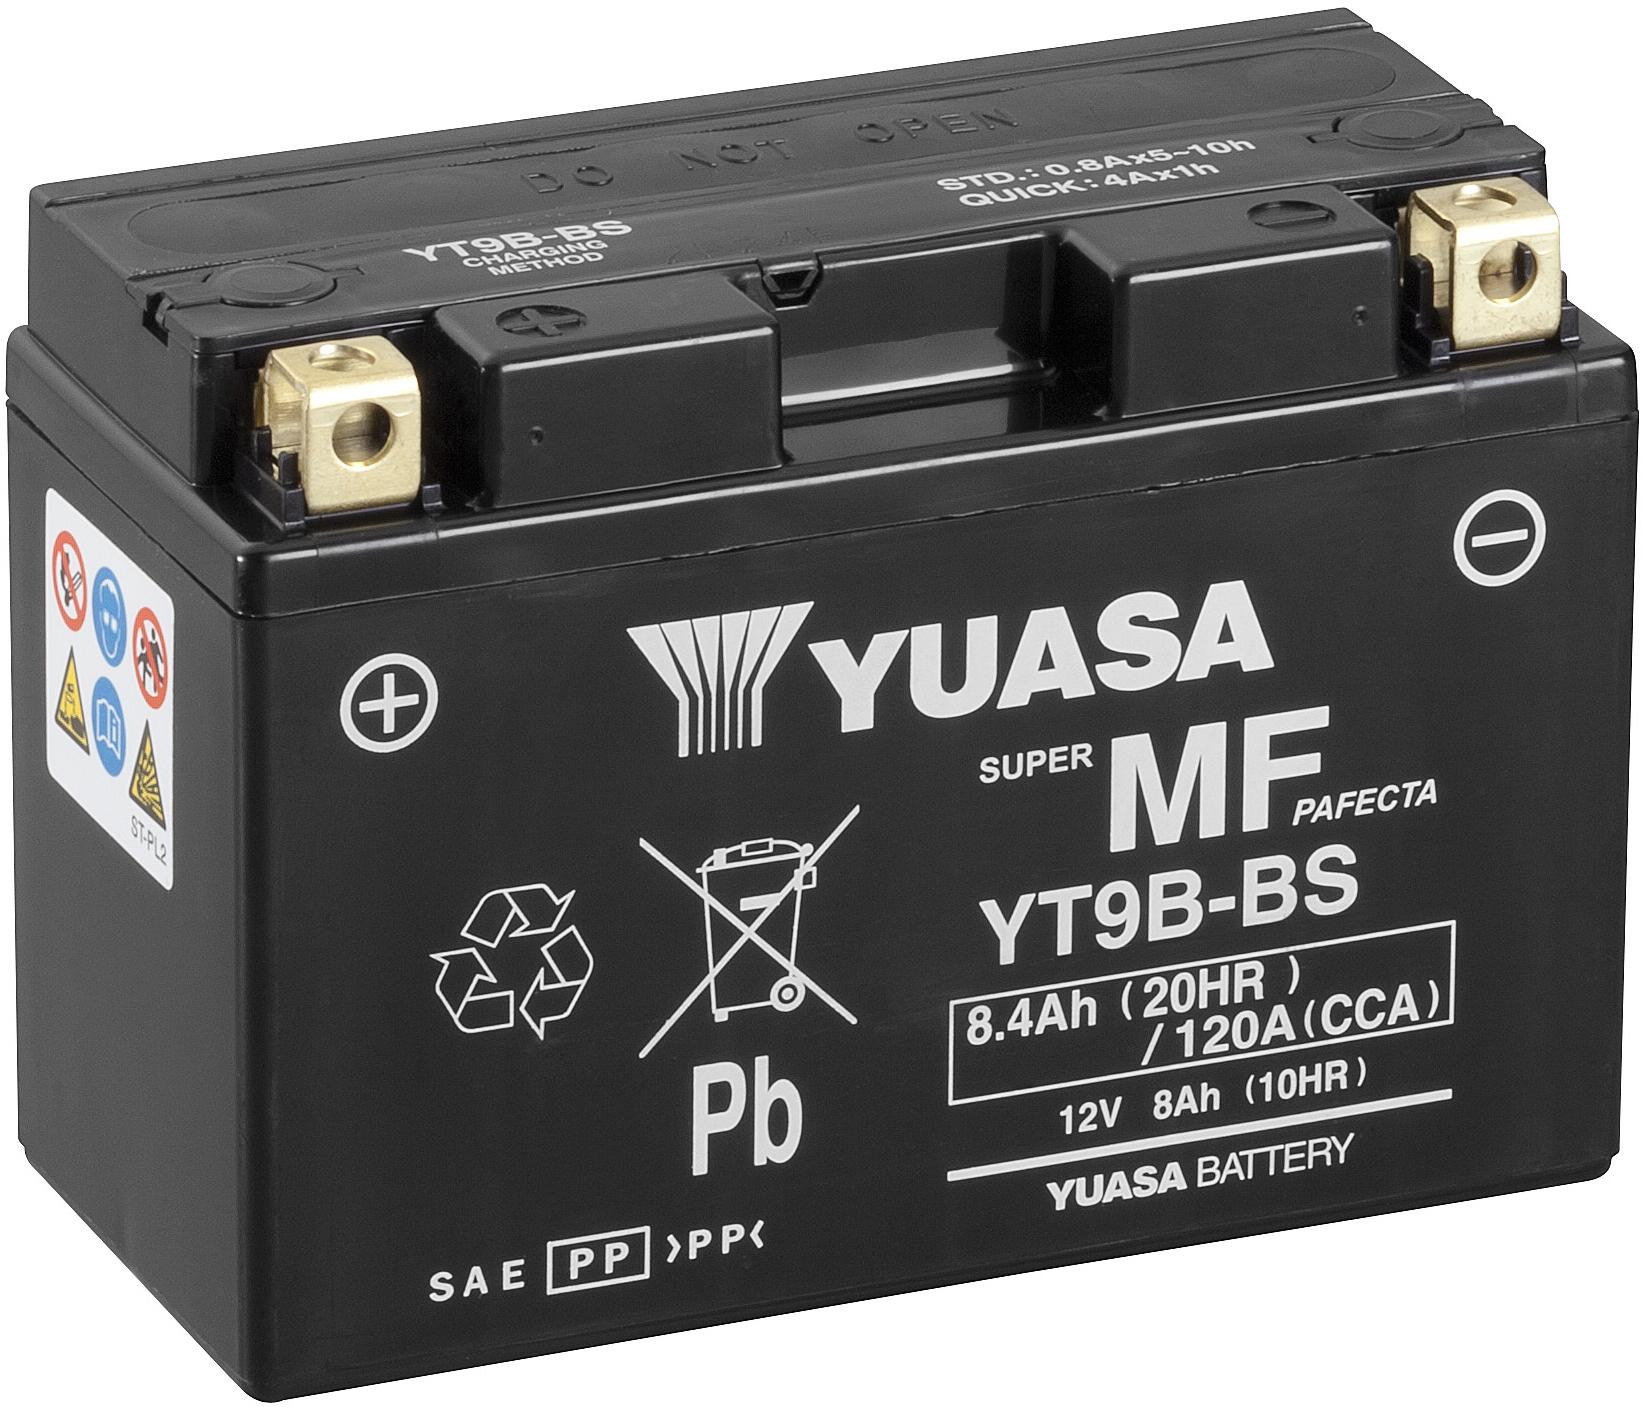 Yuasa Powersport Battery Yt9B-Bs